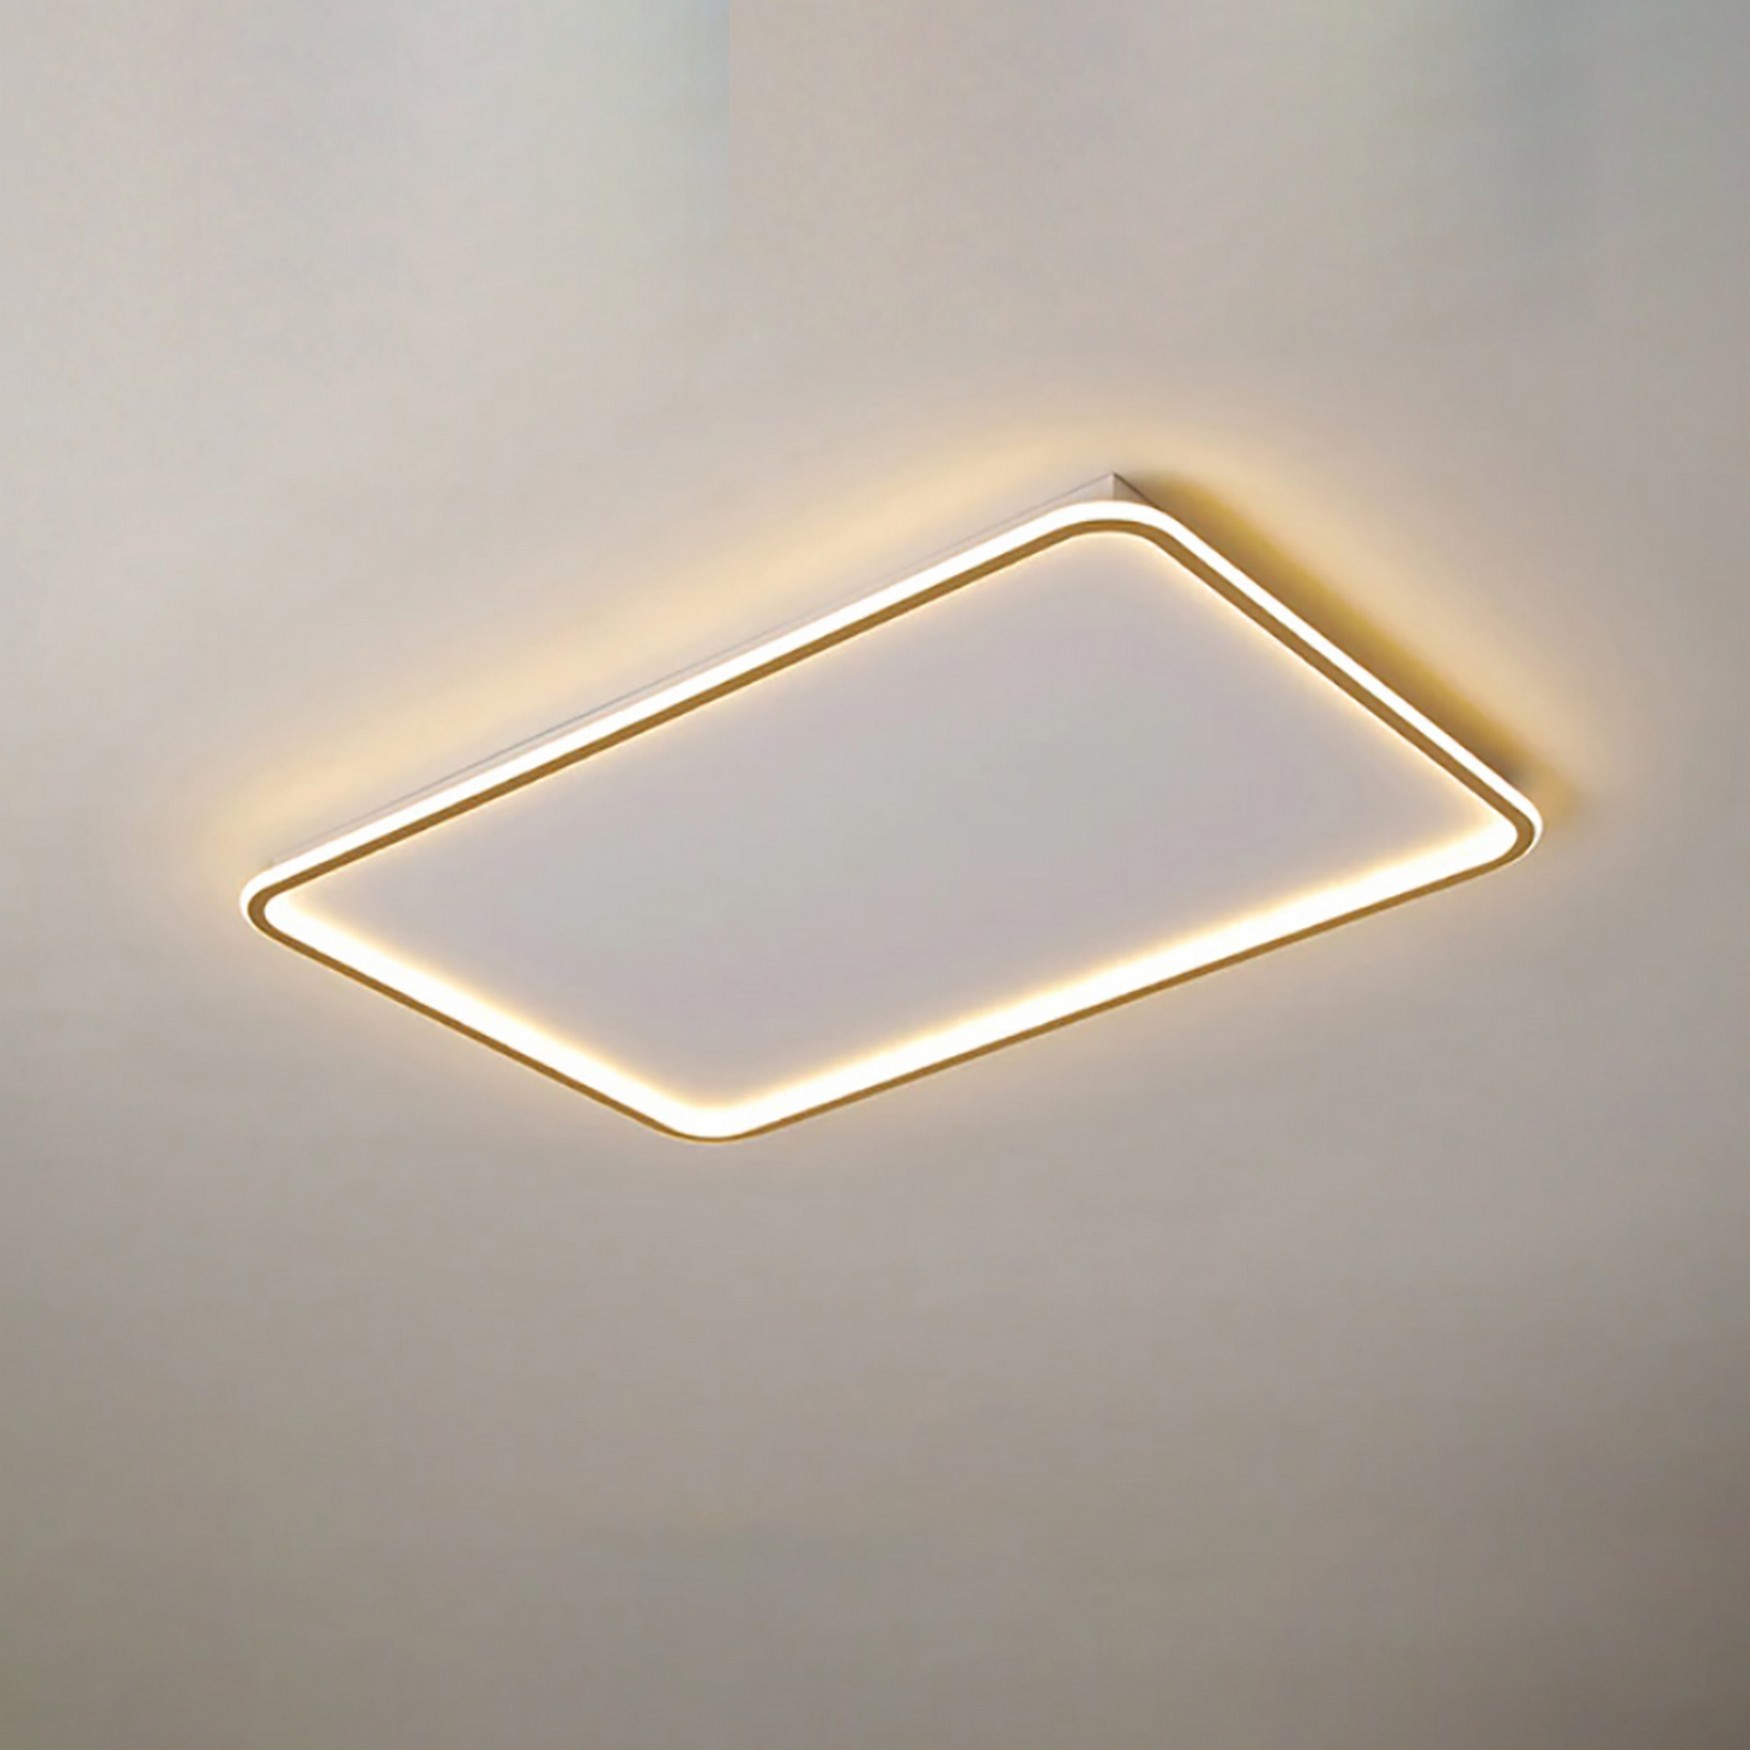 BASIS LED Ceiling Light TRA54103 90*60cm 